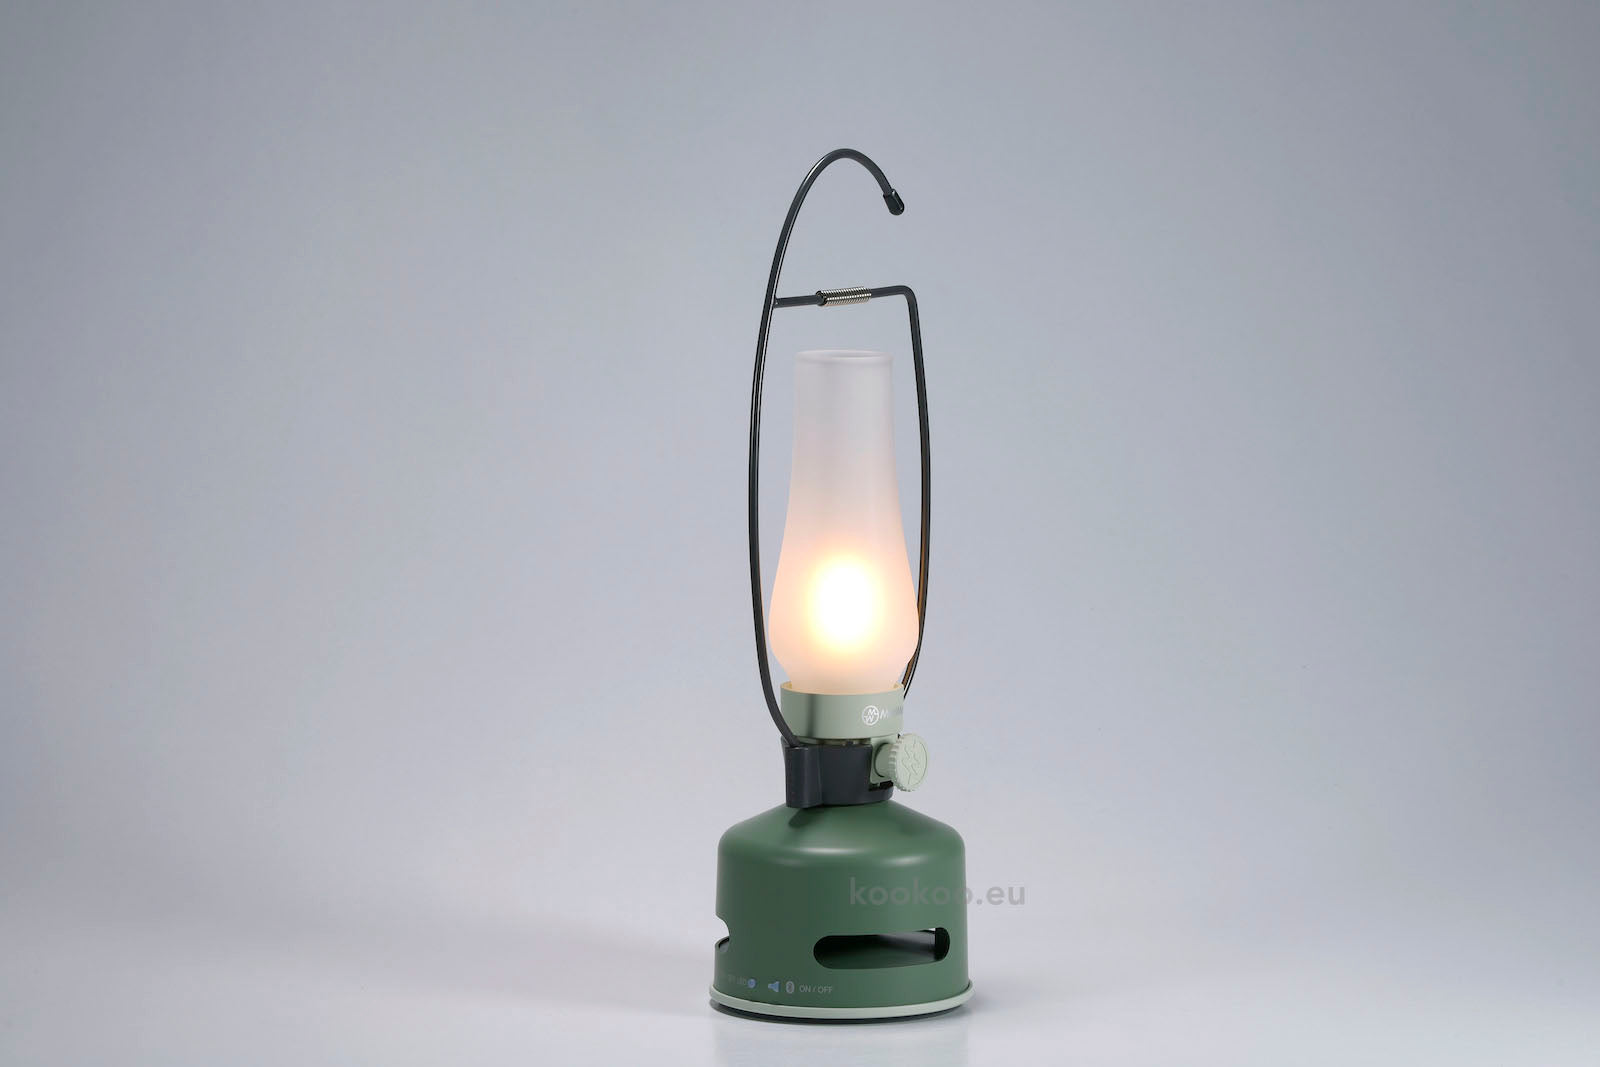 SBAM Mori Mori LED Lantern with Bluetooth Speaker - Original Green